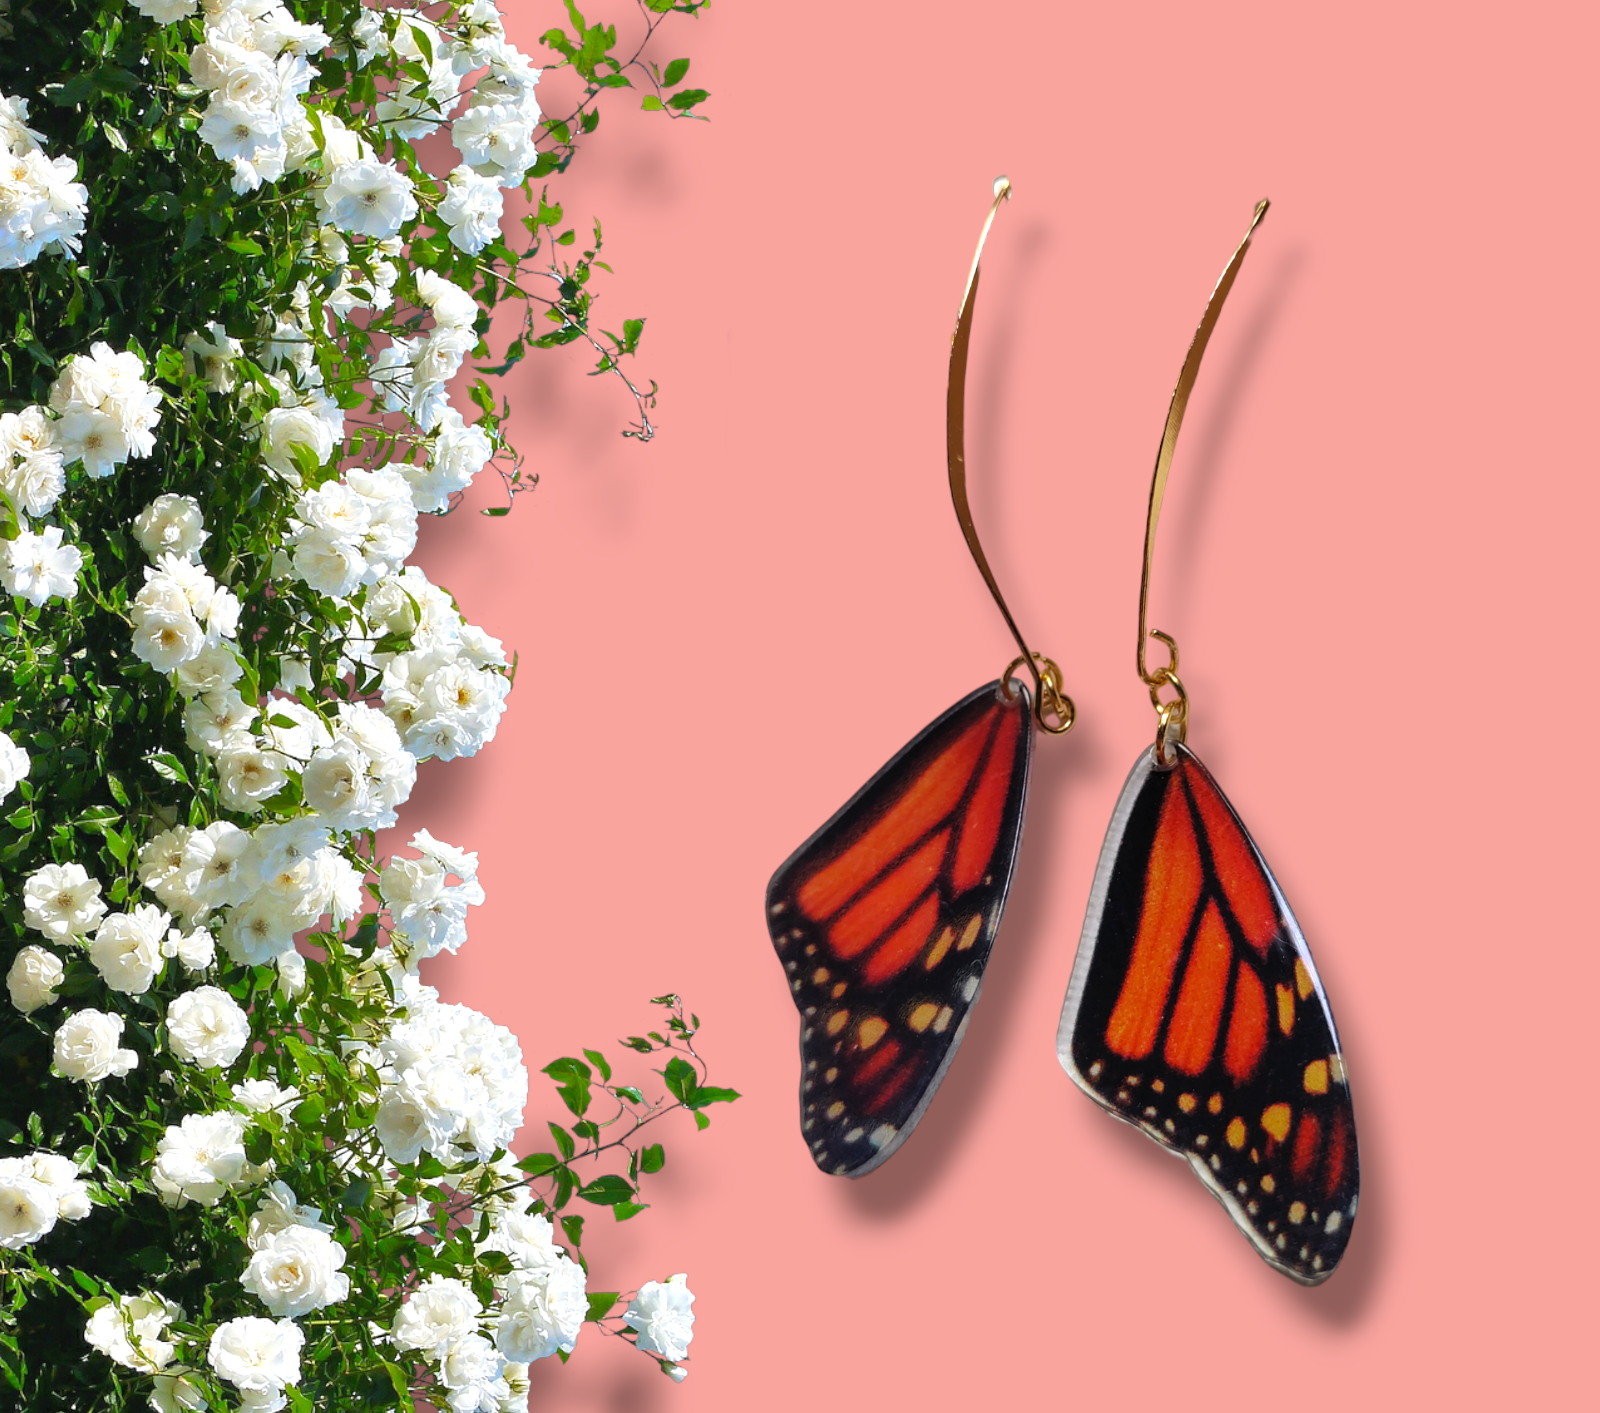 Butterfly Wings (Resin ) earrings from Karma Goodness Designs